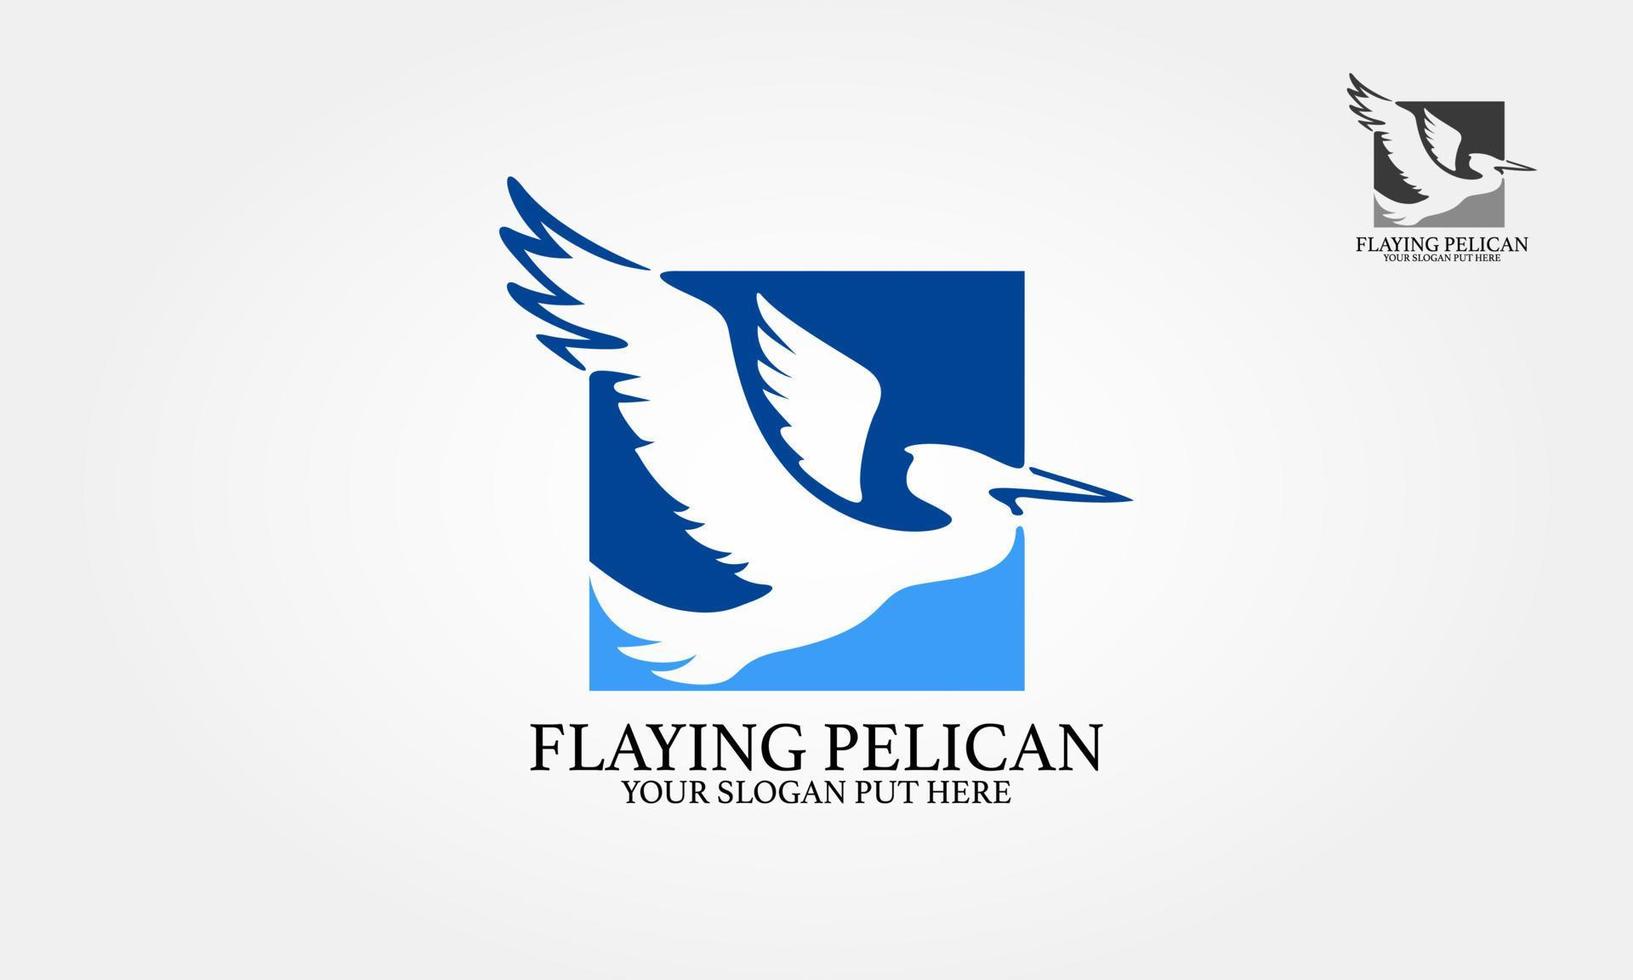 Flaying Pelican Logo Template. Pelican vector design.